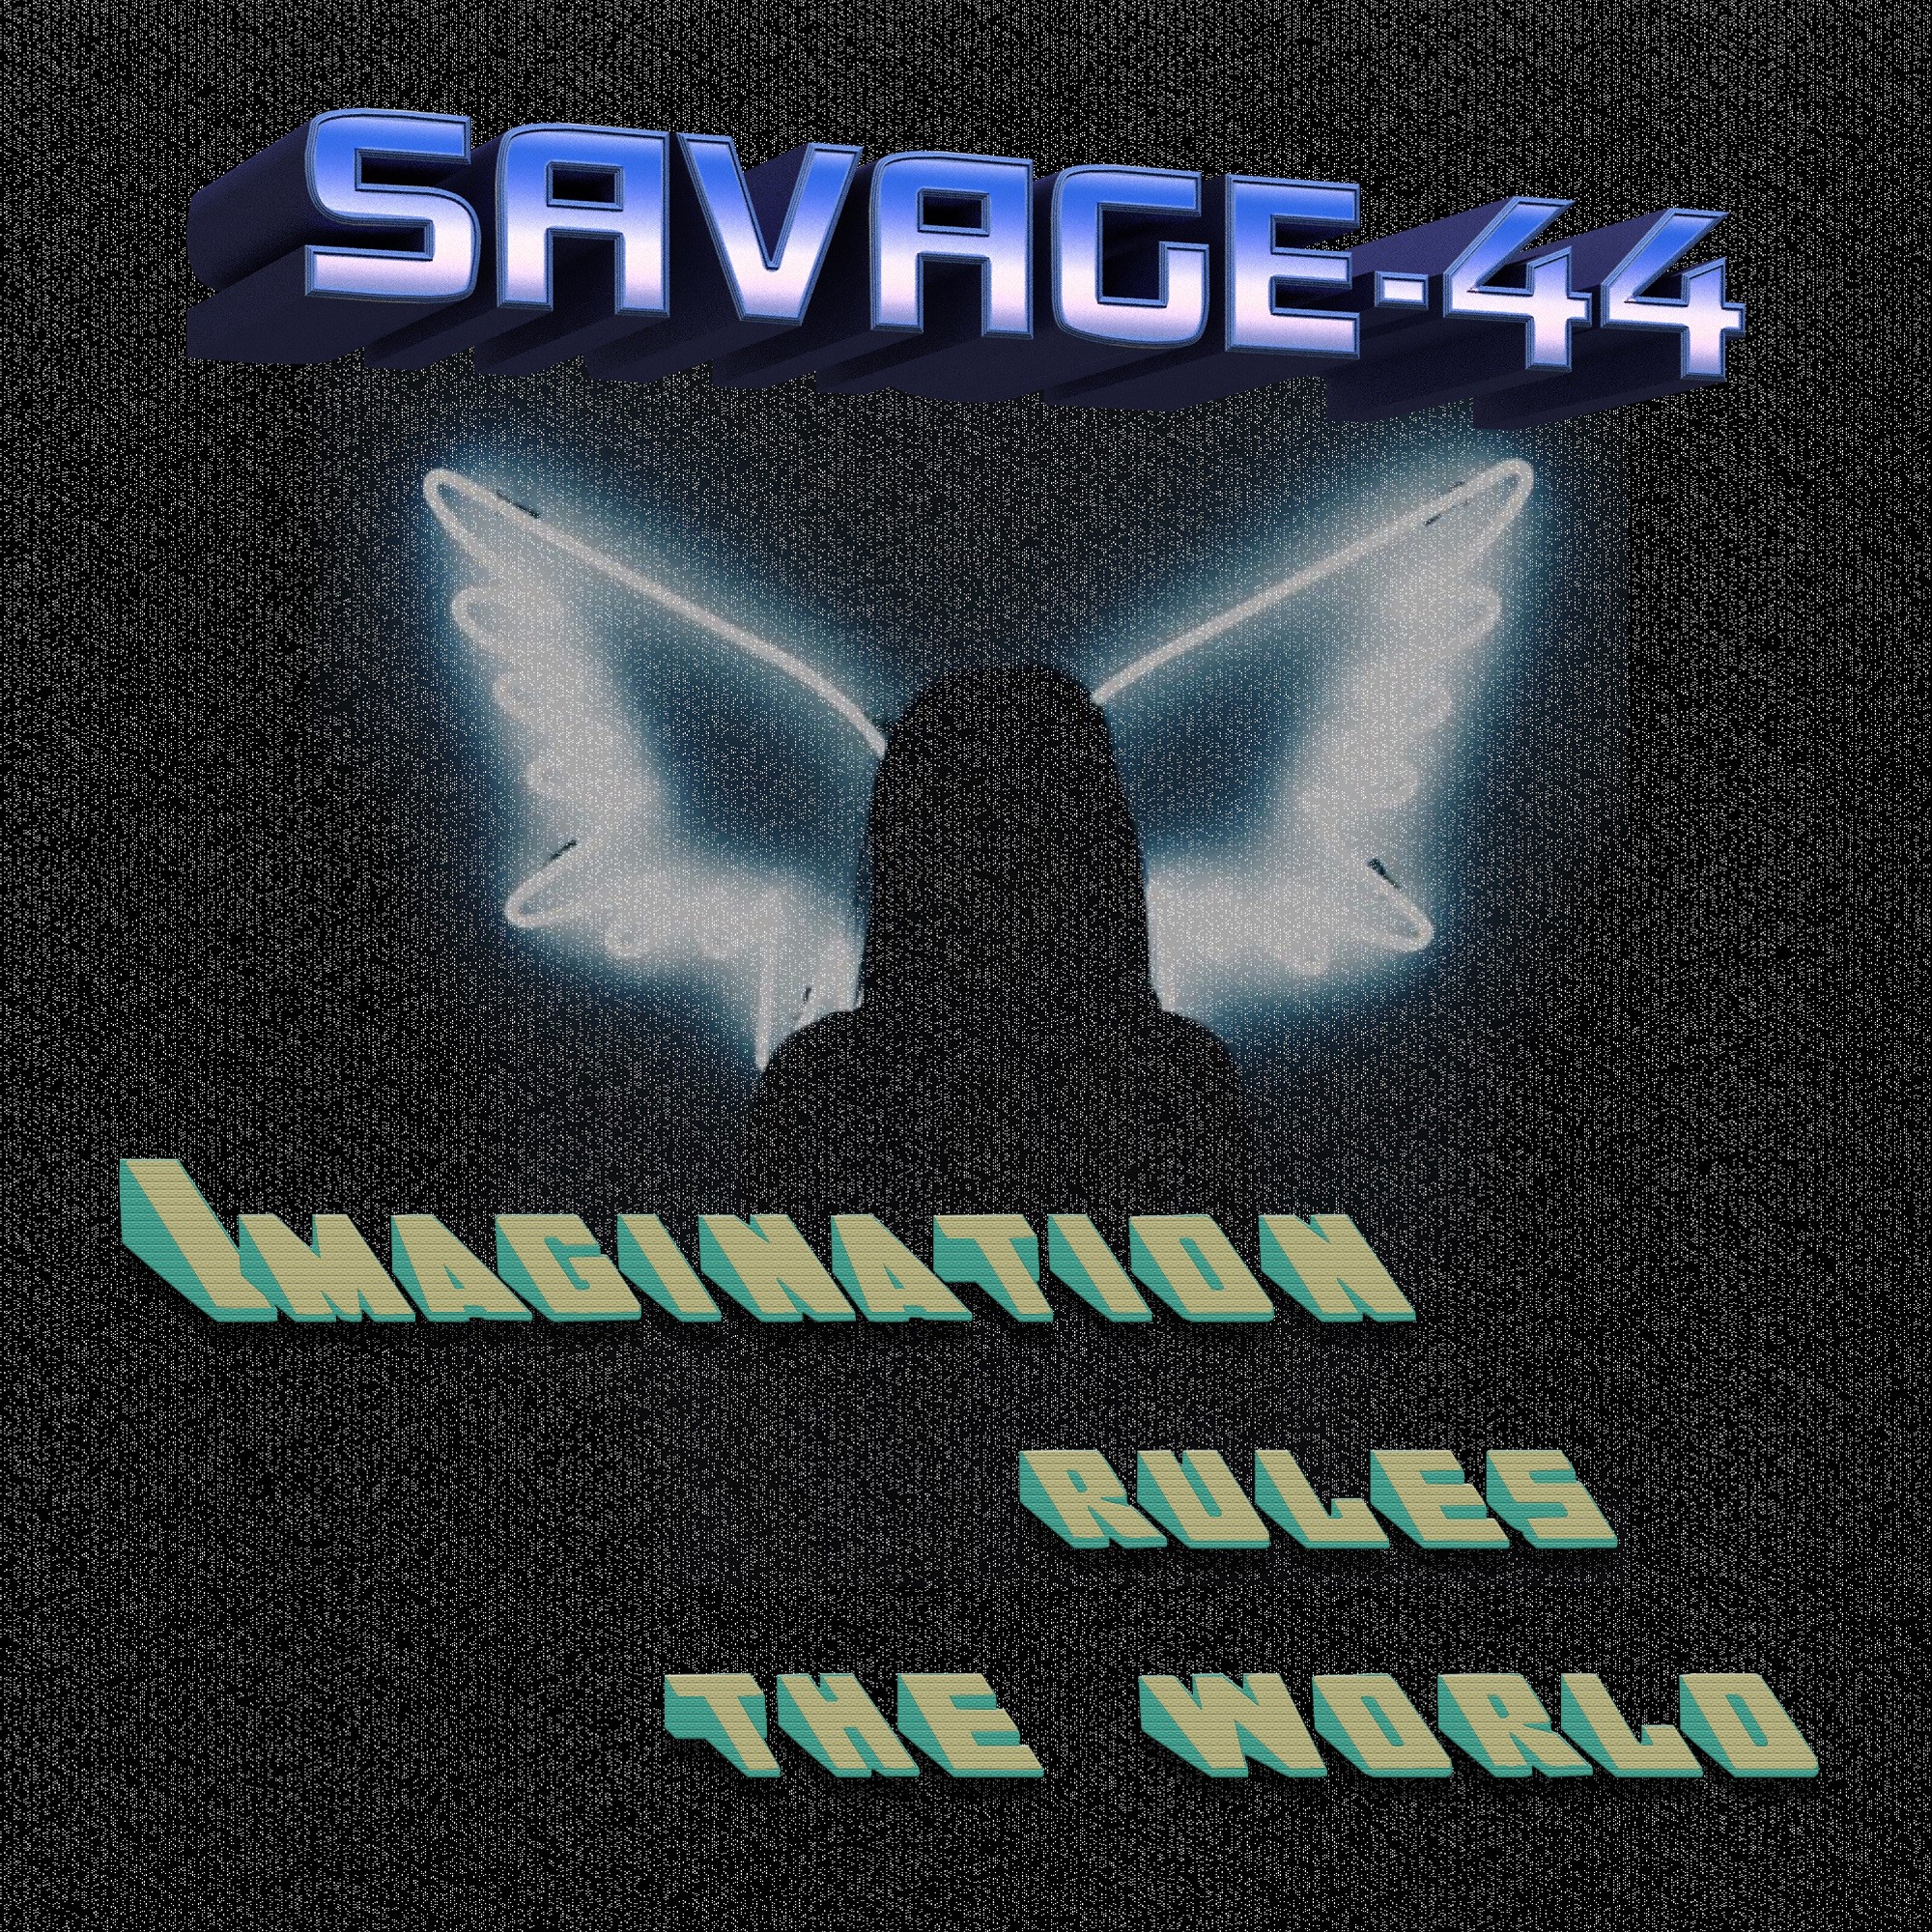 Savage 44 club drive new. Savage 44. Саваж 44 Евроданс. Morozoff Savage-44. Savage 44 imagination Rules the World.